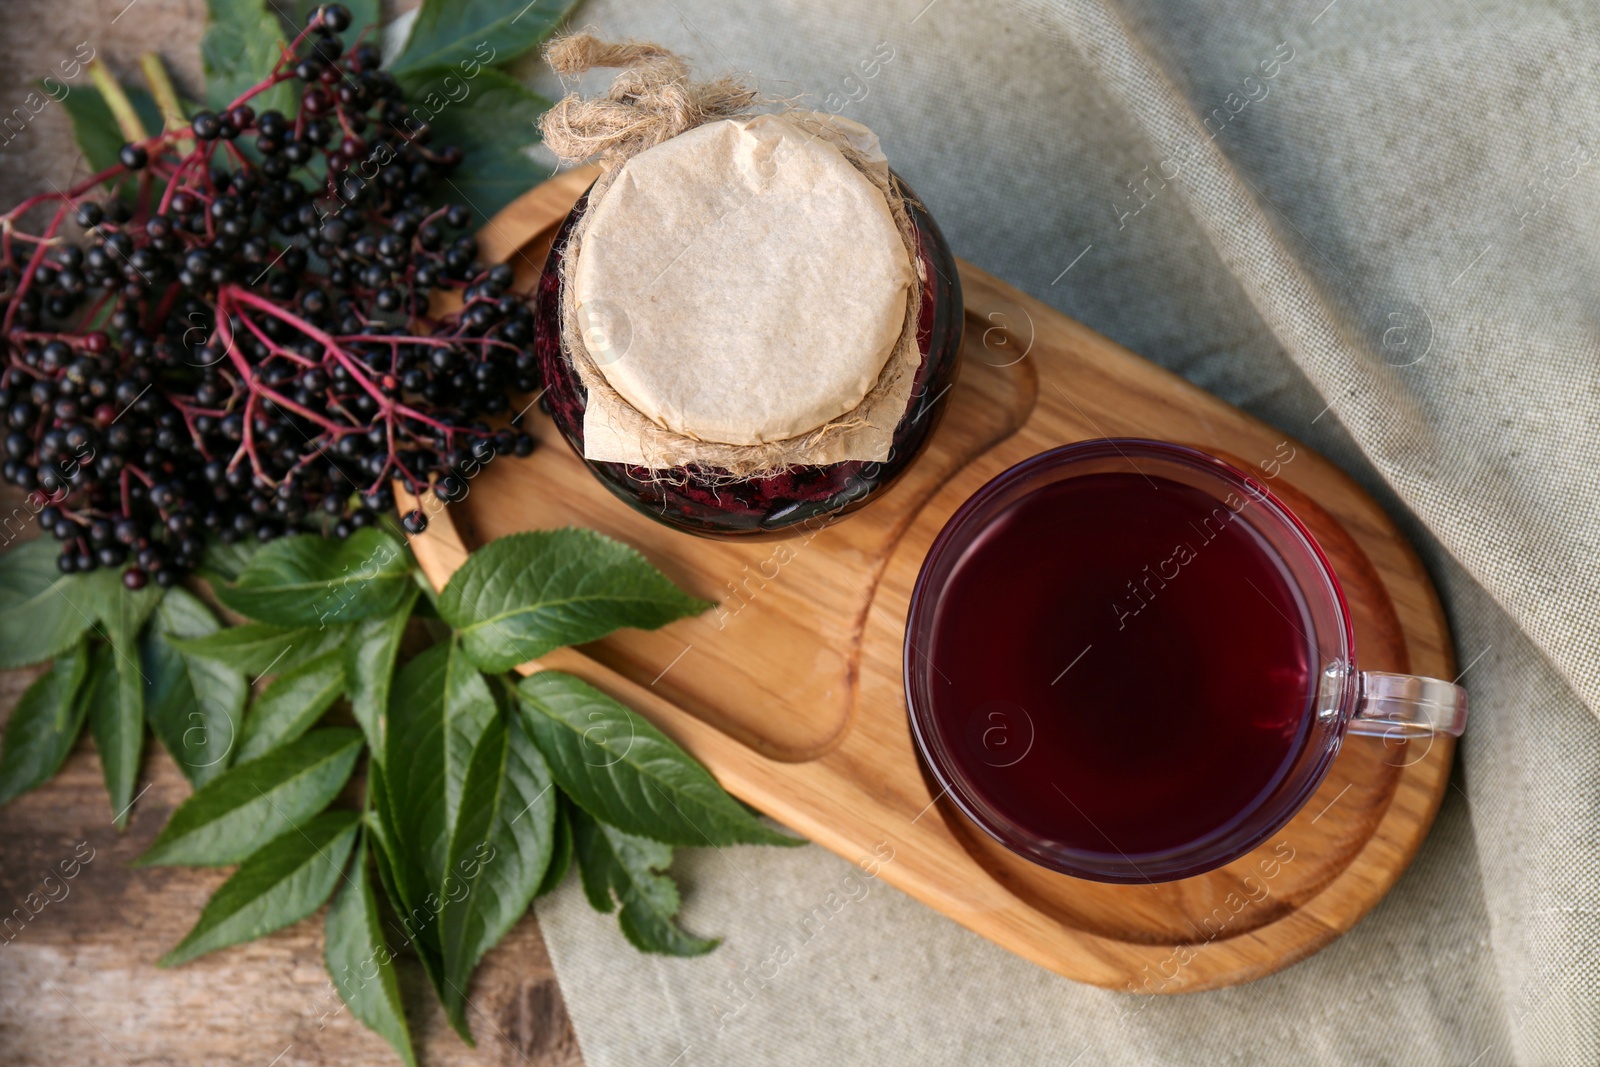 Photo of Elderberry jam, glass cup of tea and Sambucus berries on table, flat lay